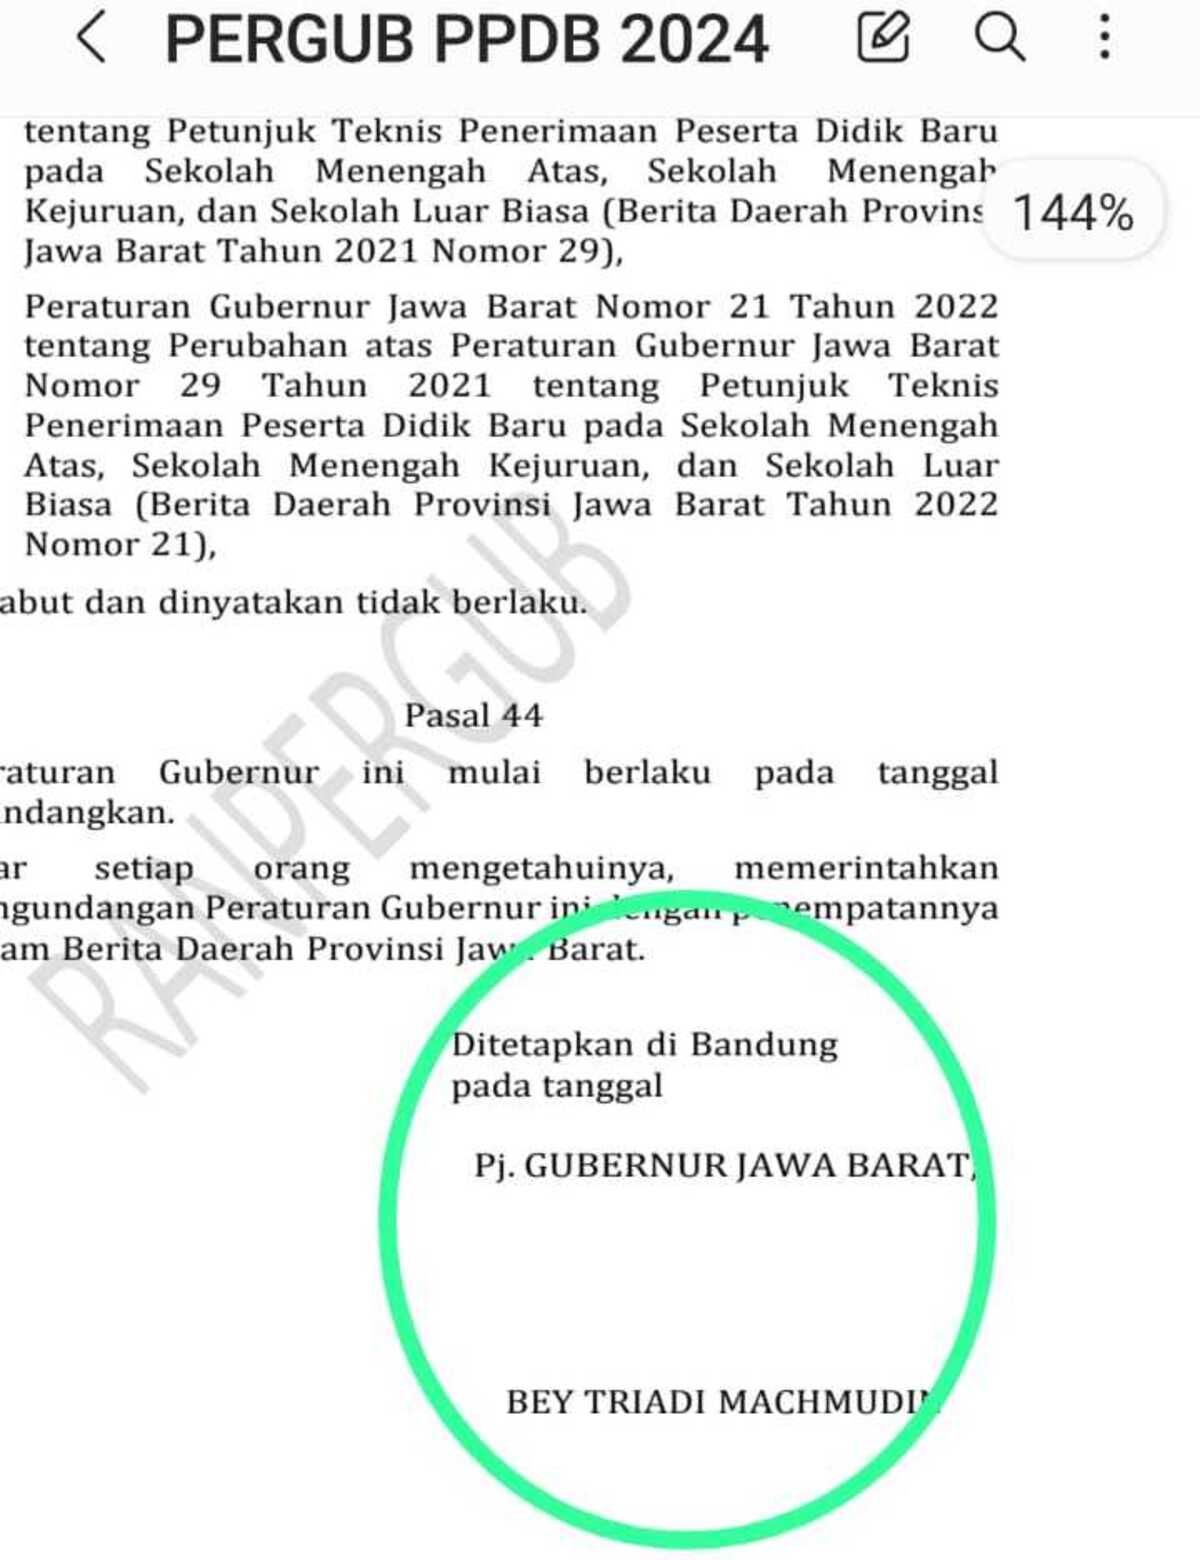 Tangkapan layar Rancangan Pergub PPDB 2024 yang belum ditandatangani Pj Gubernur Jawa Barat, Bey Triadi Machmudin